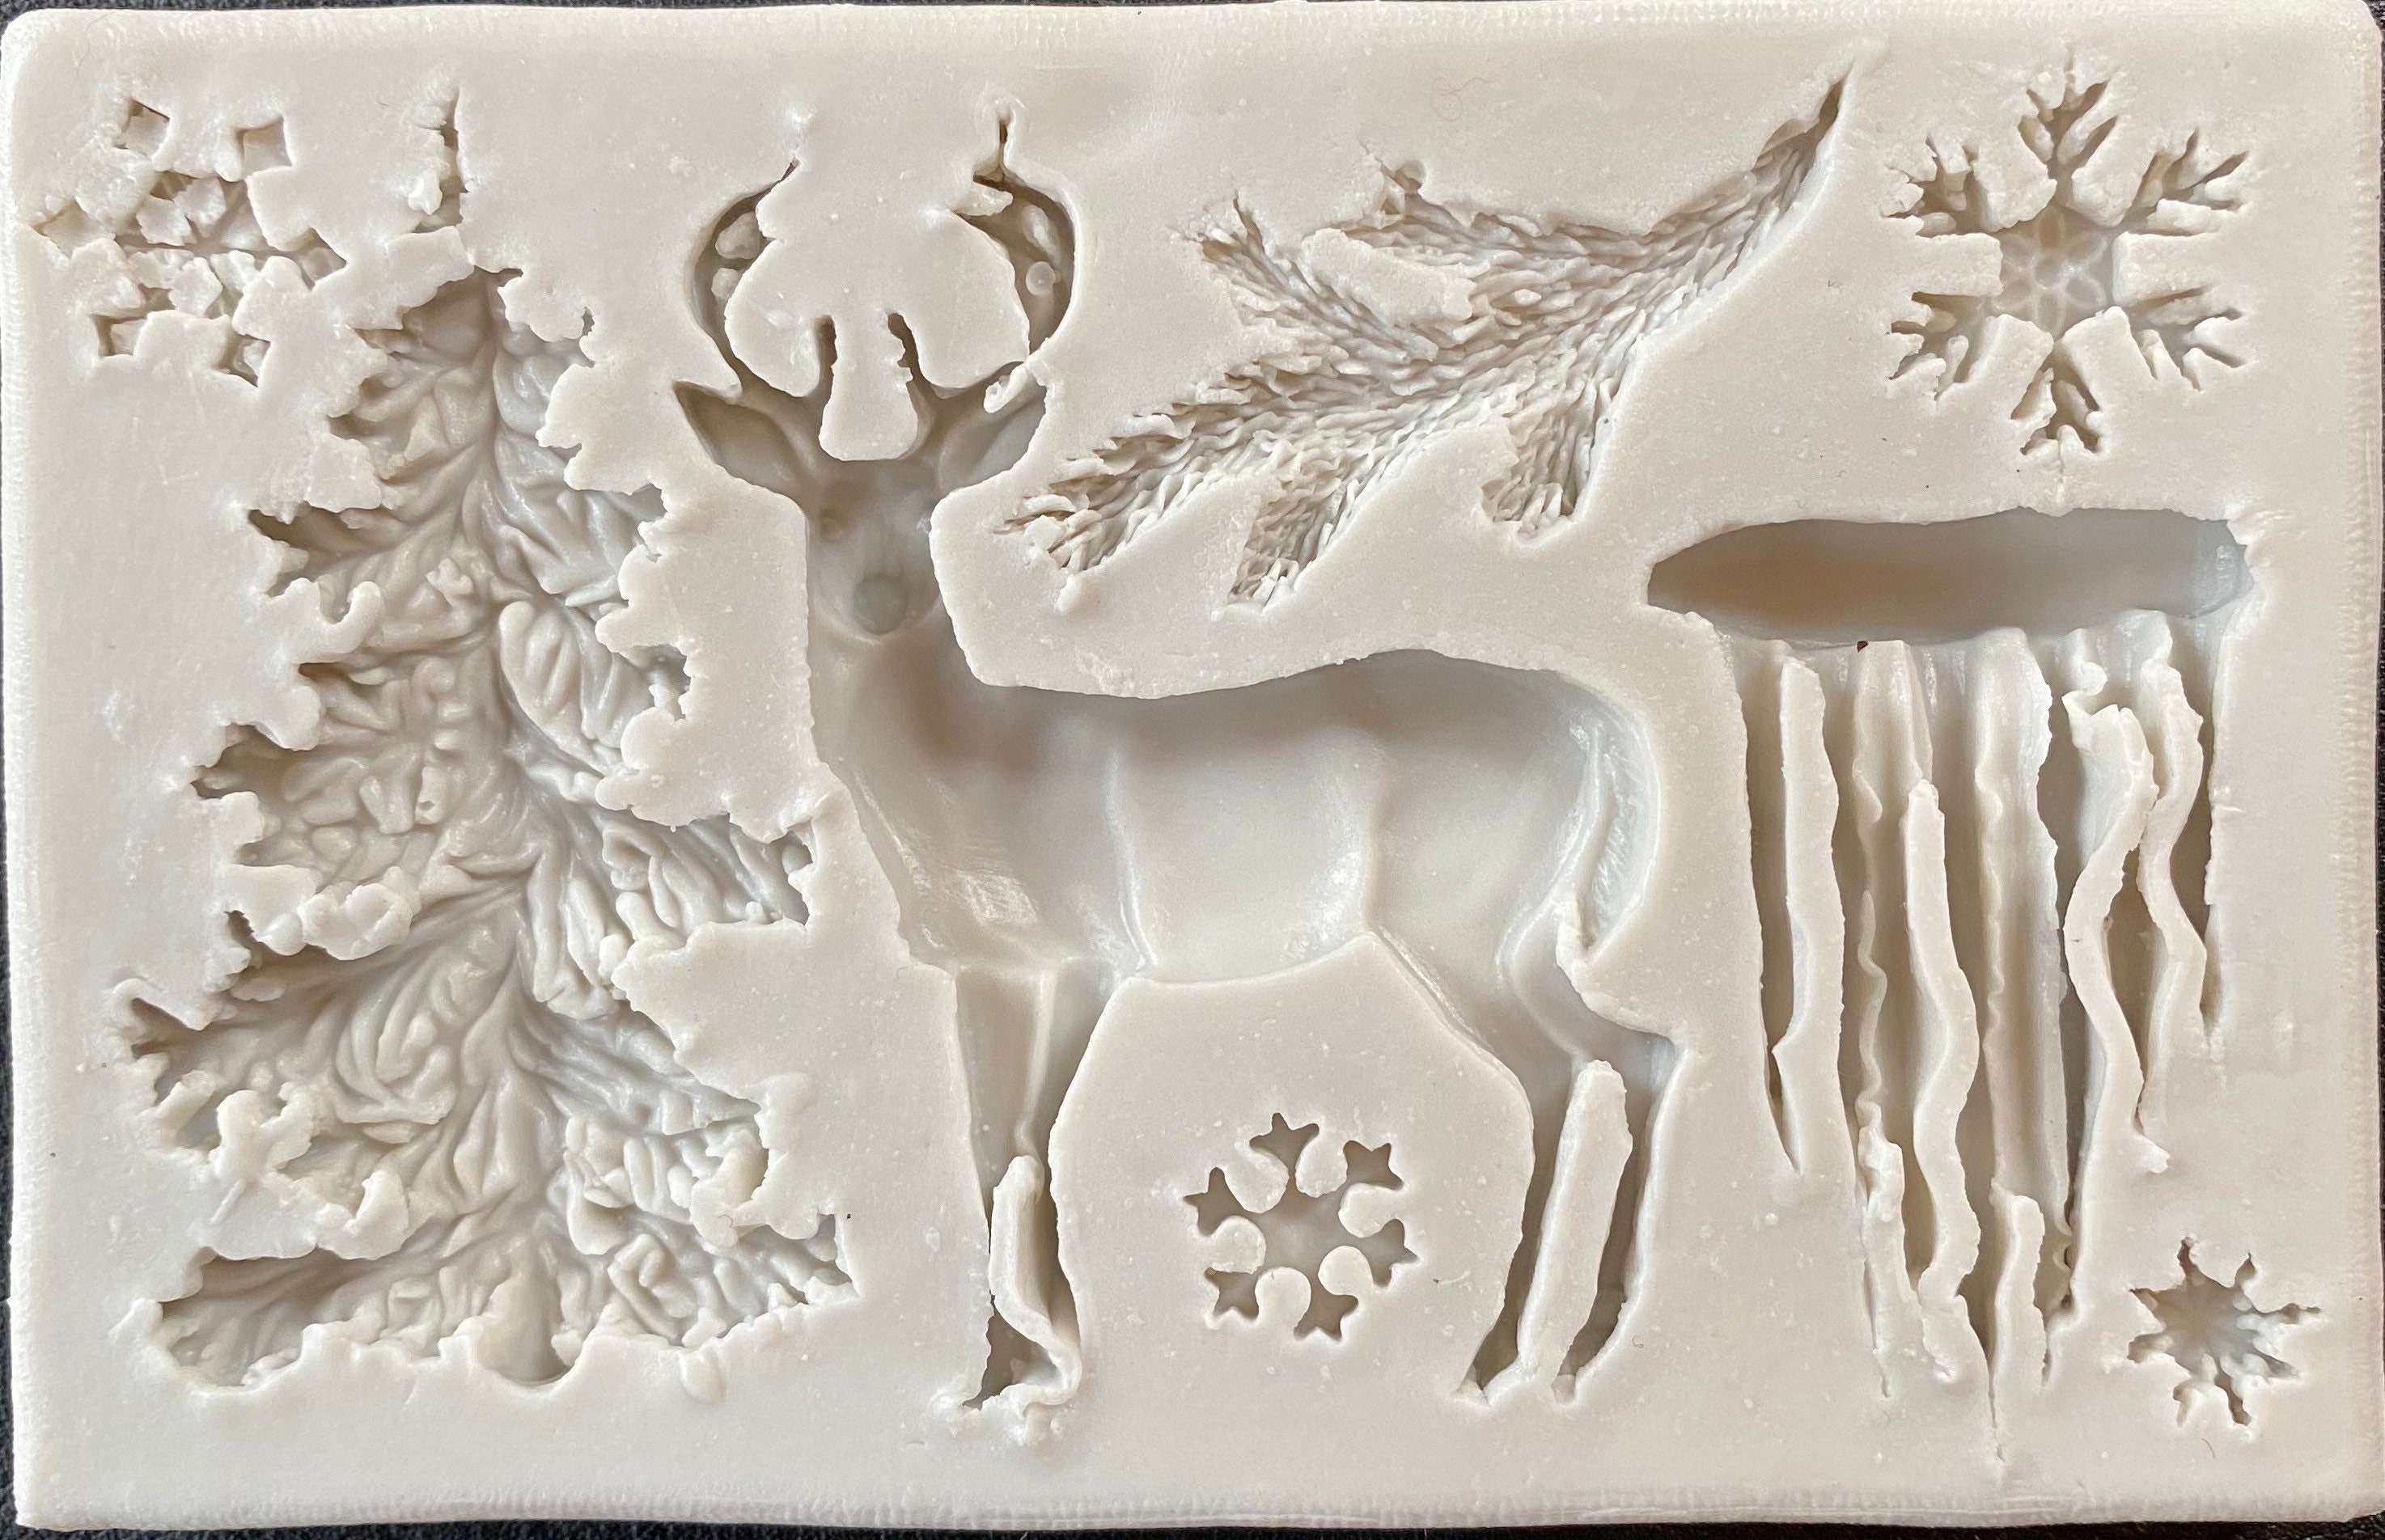 FAIS DU Silicone Mold Christmas Tree Sock Snowflake Chocolate